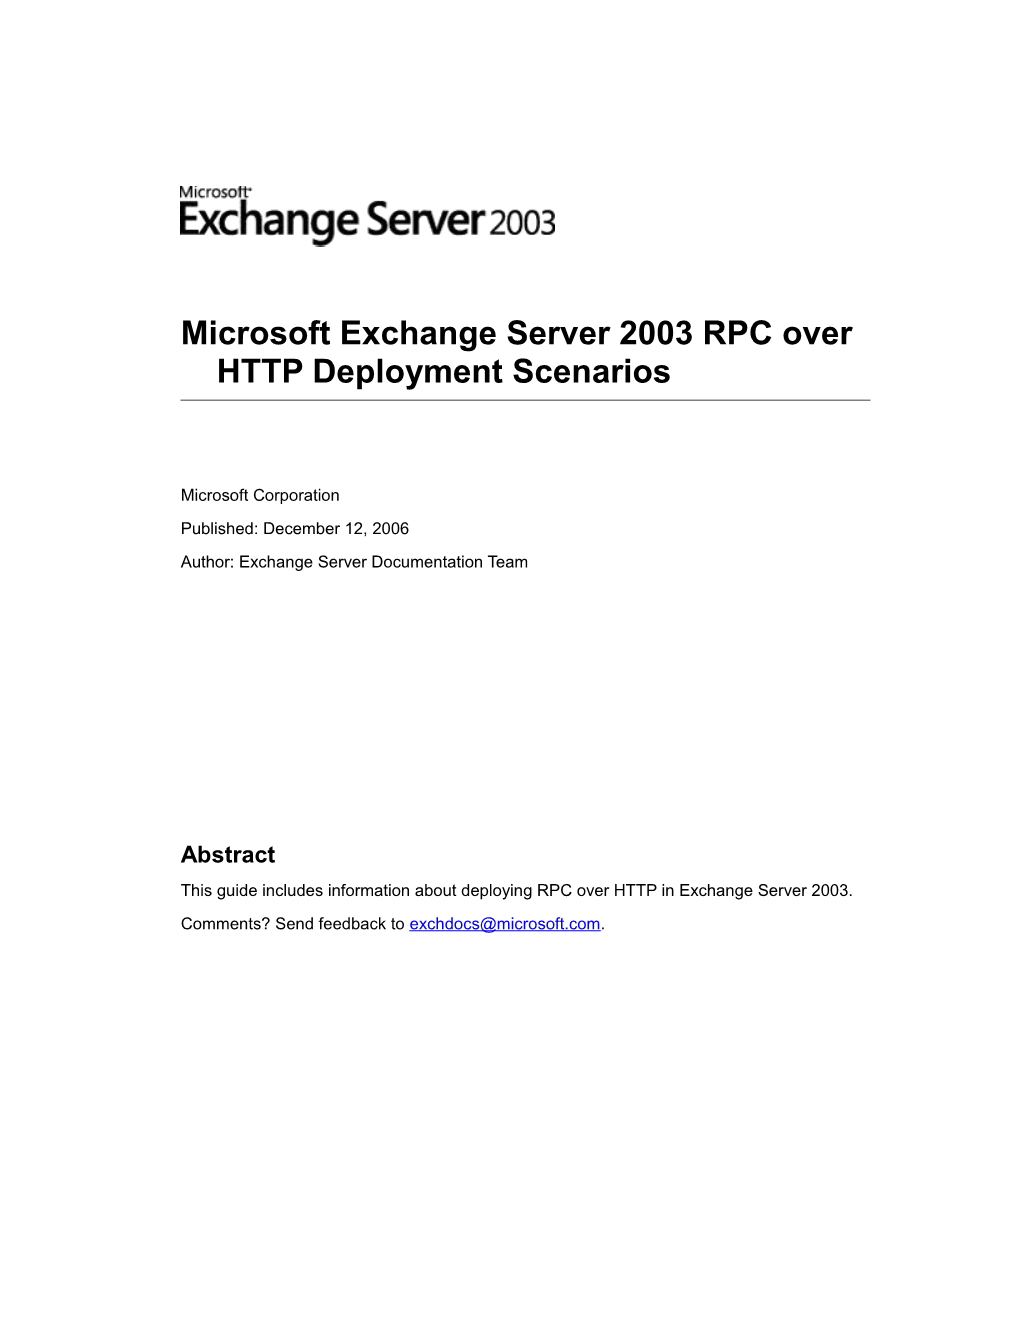 Microsoft Exchange Server 2003 RPC Over HTTP Deployment Scenarios